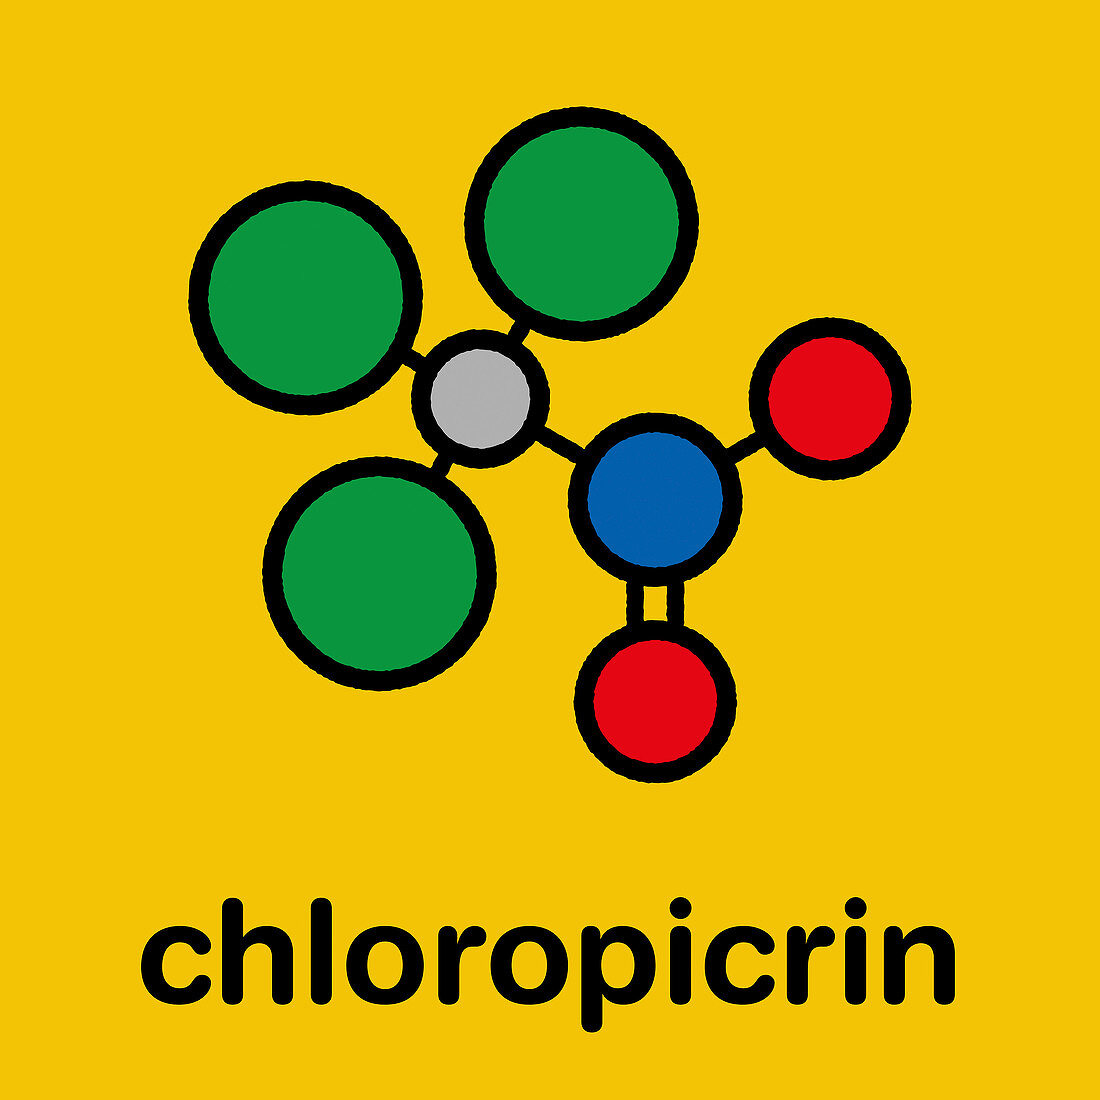 Chloropicrin soil fumigant molecule